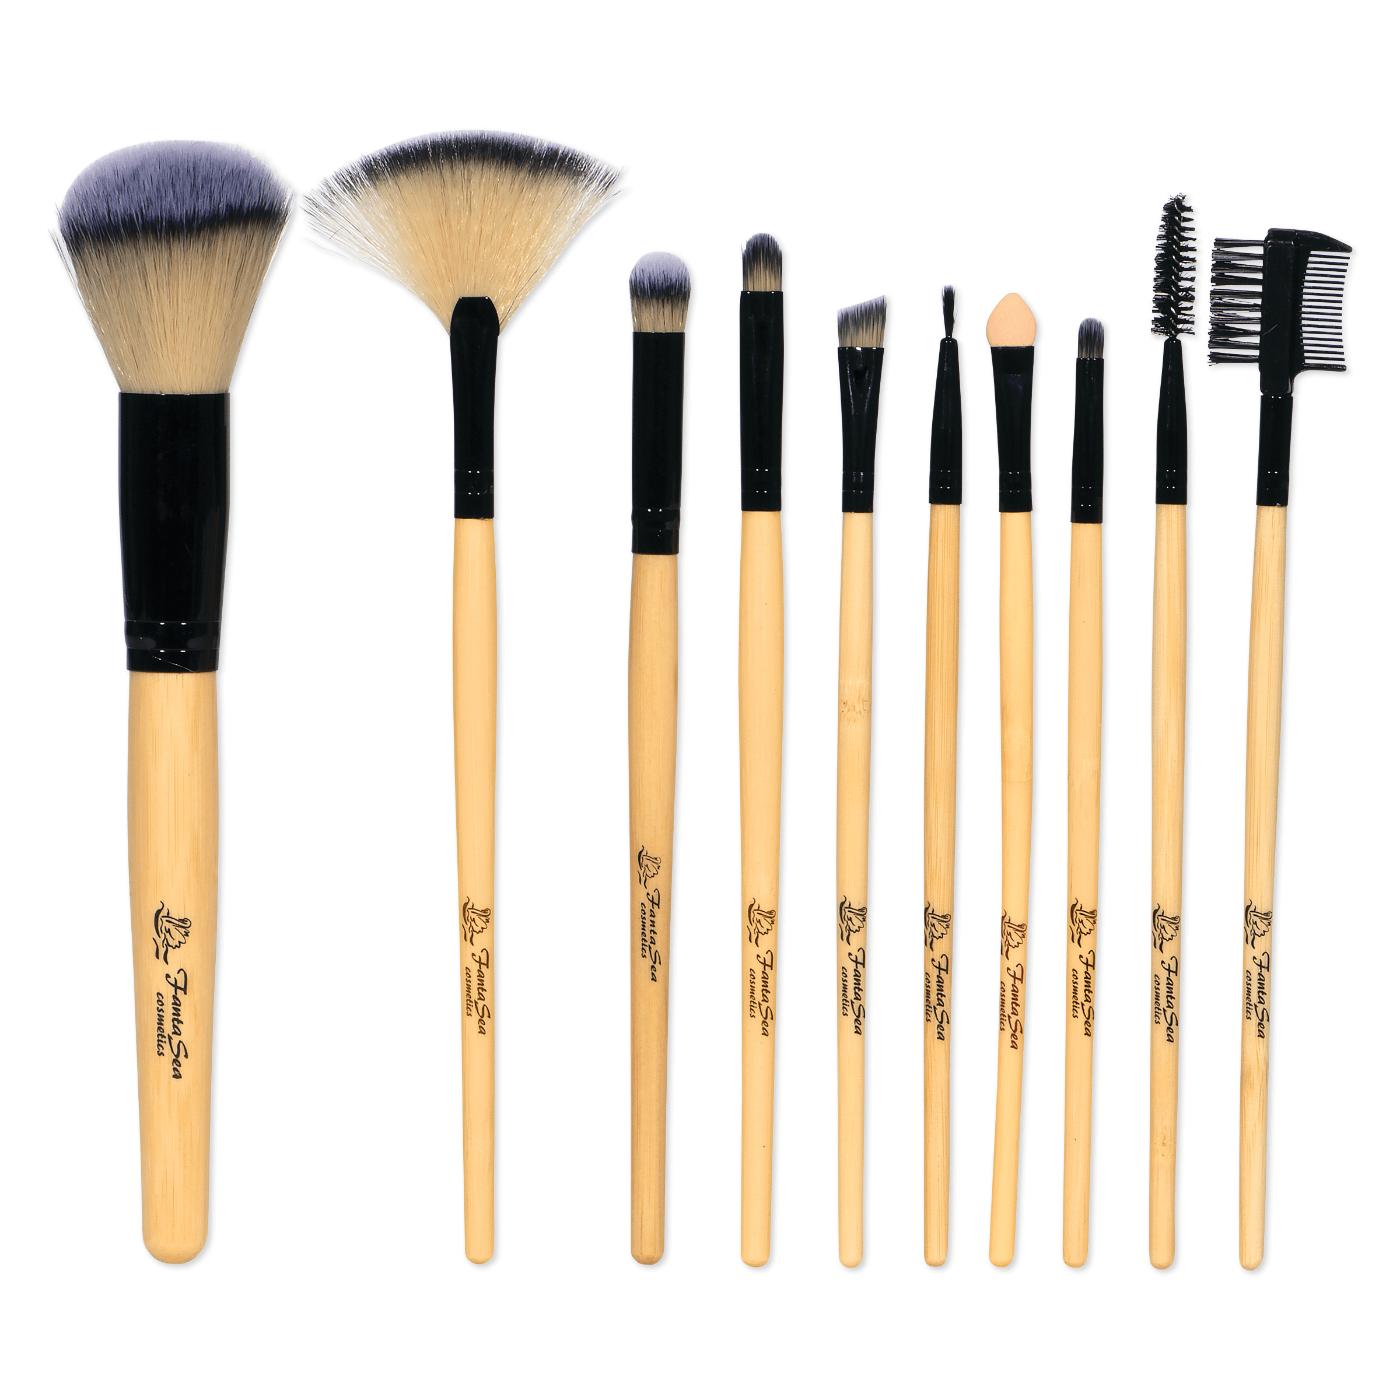 Bamboo Makeup Brush Set with Case - 10 pc.